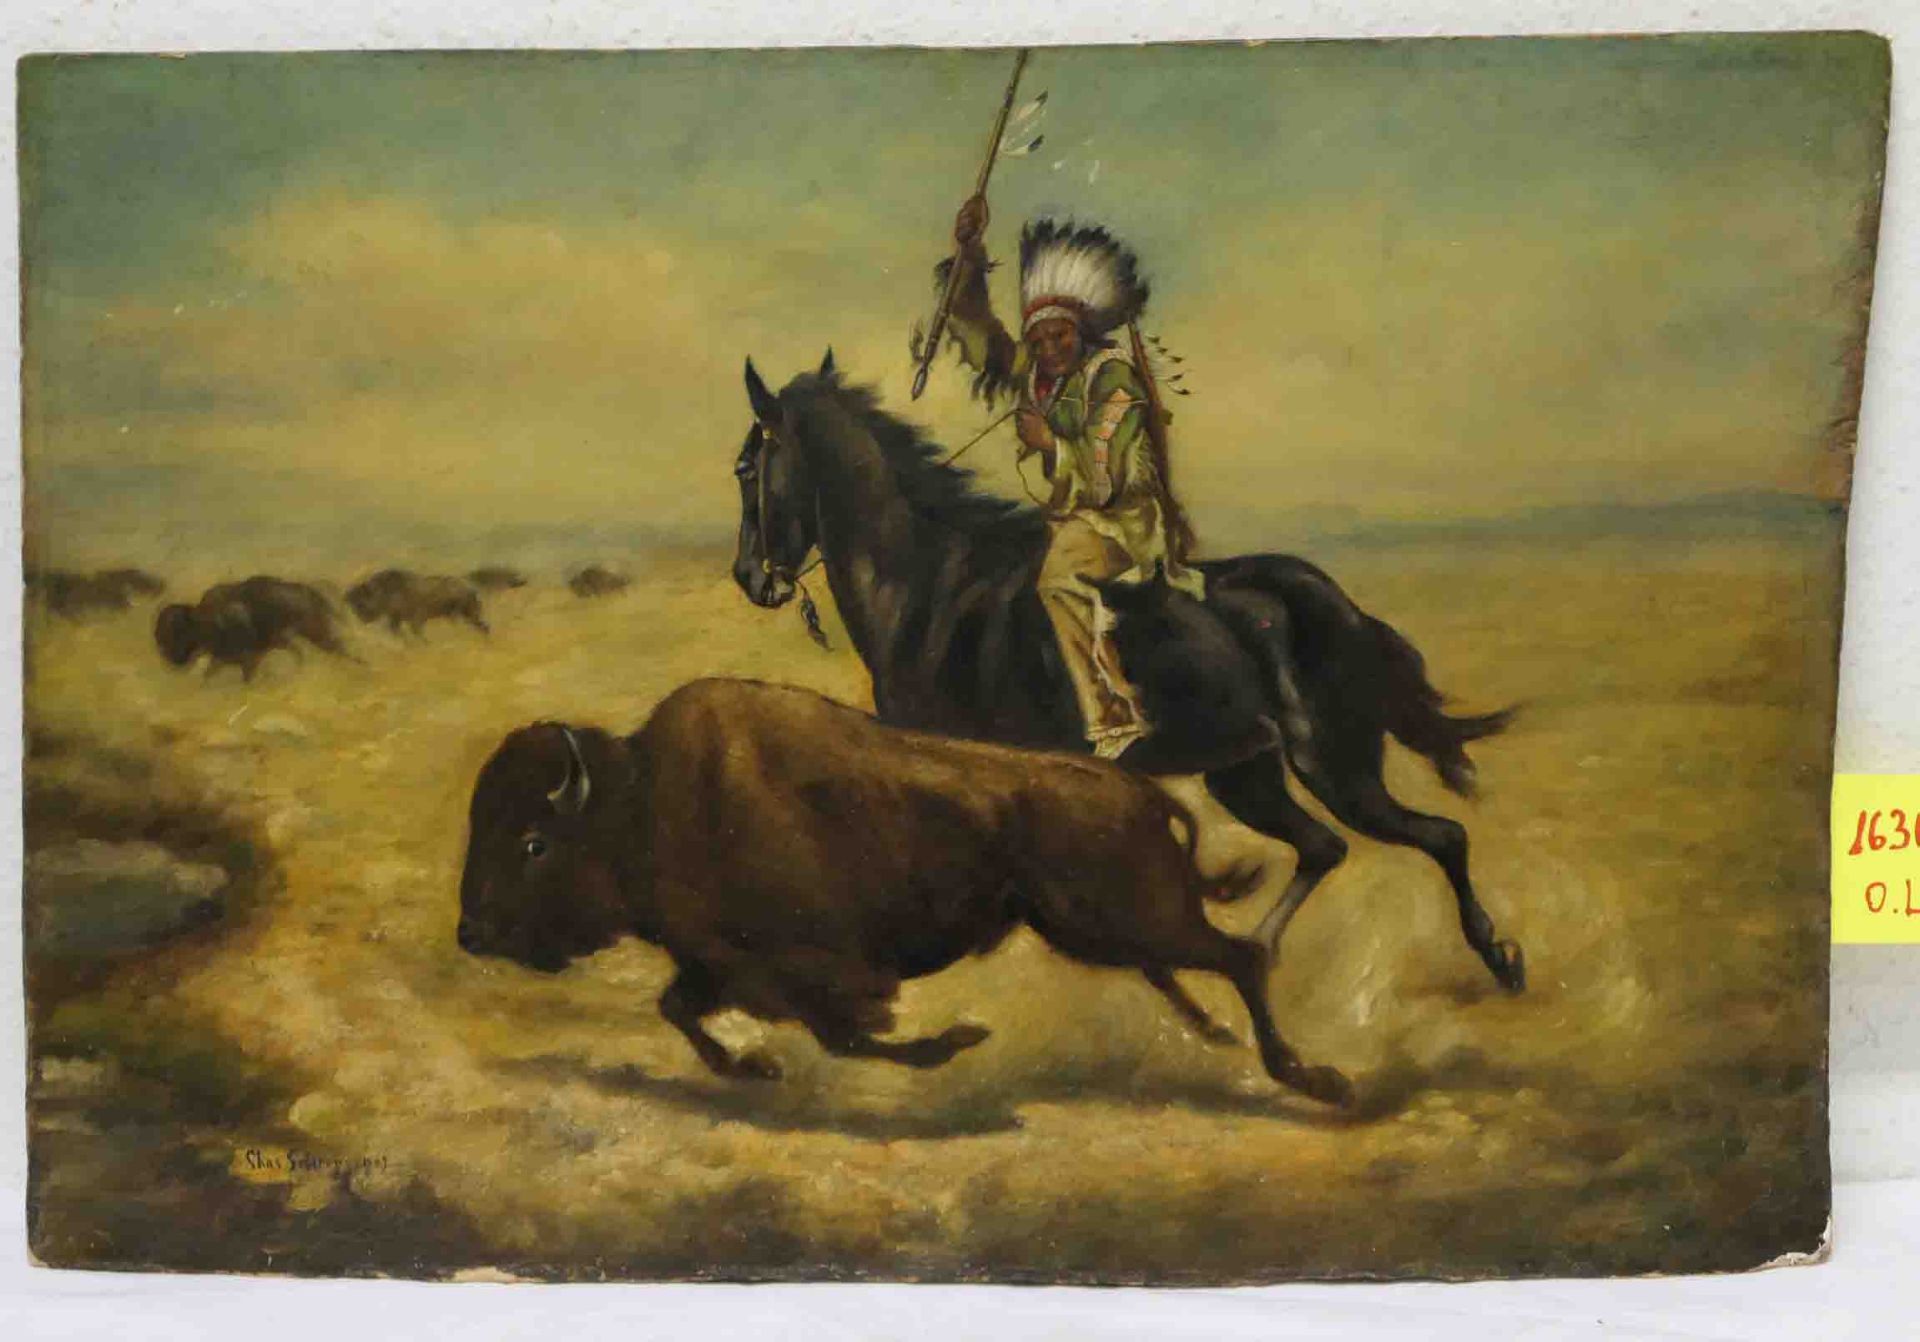 Indianer bei der Bison Jagd